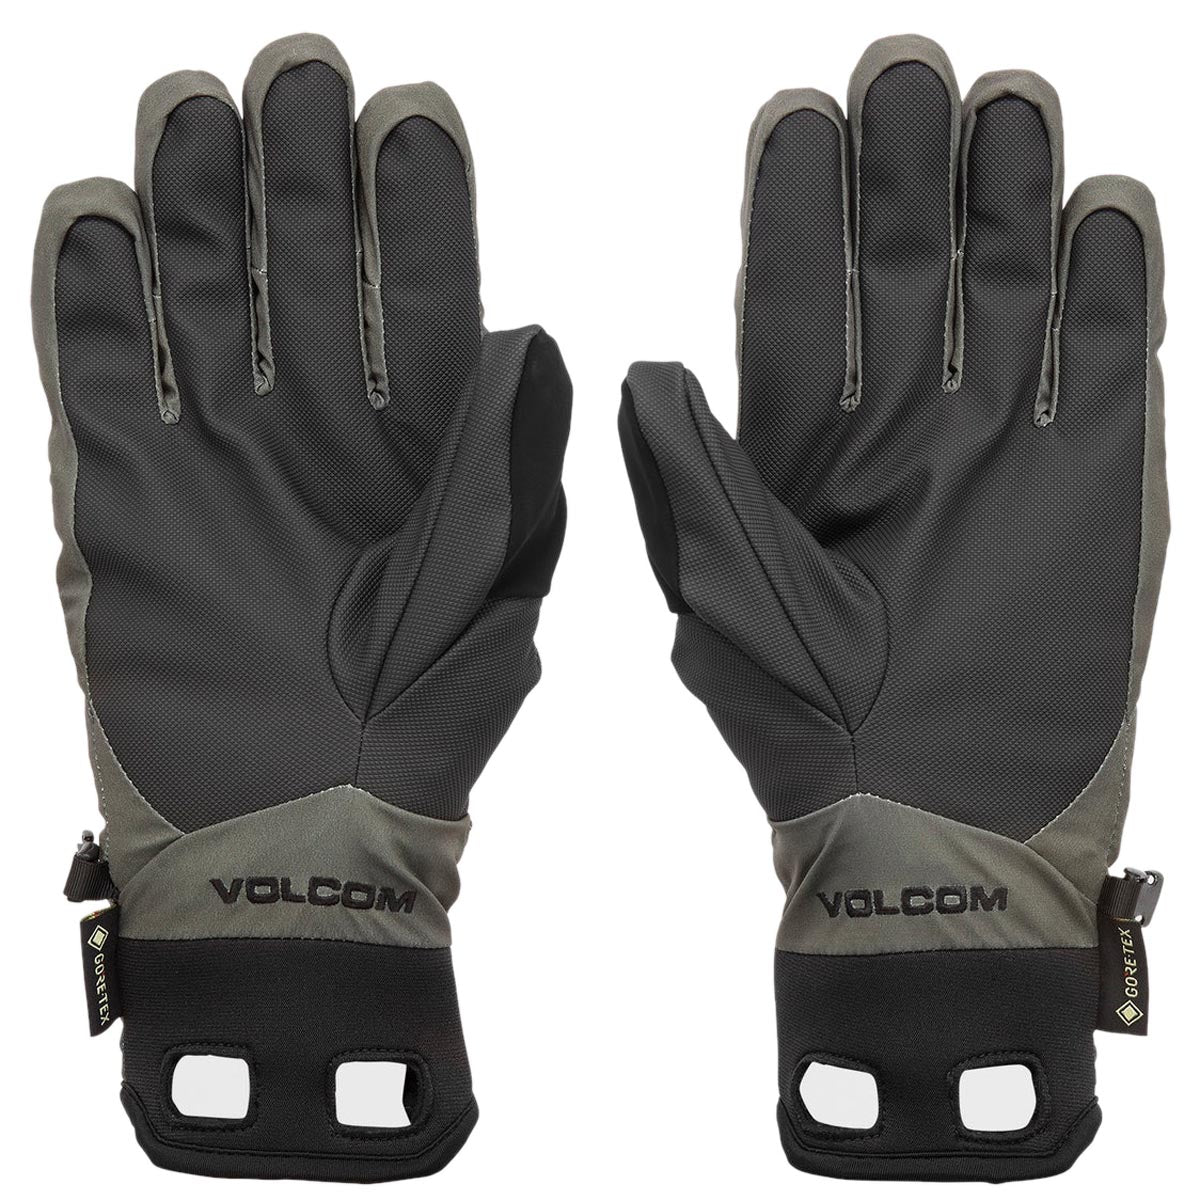 Volcom Cp2 Gore-tex Snowboard Gloves - Light Military image 2